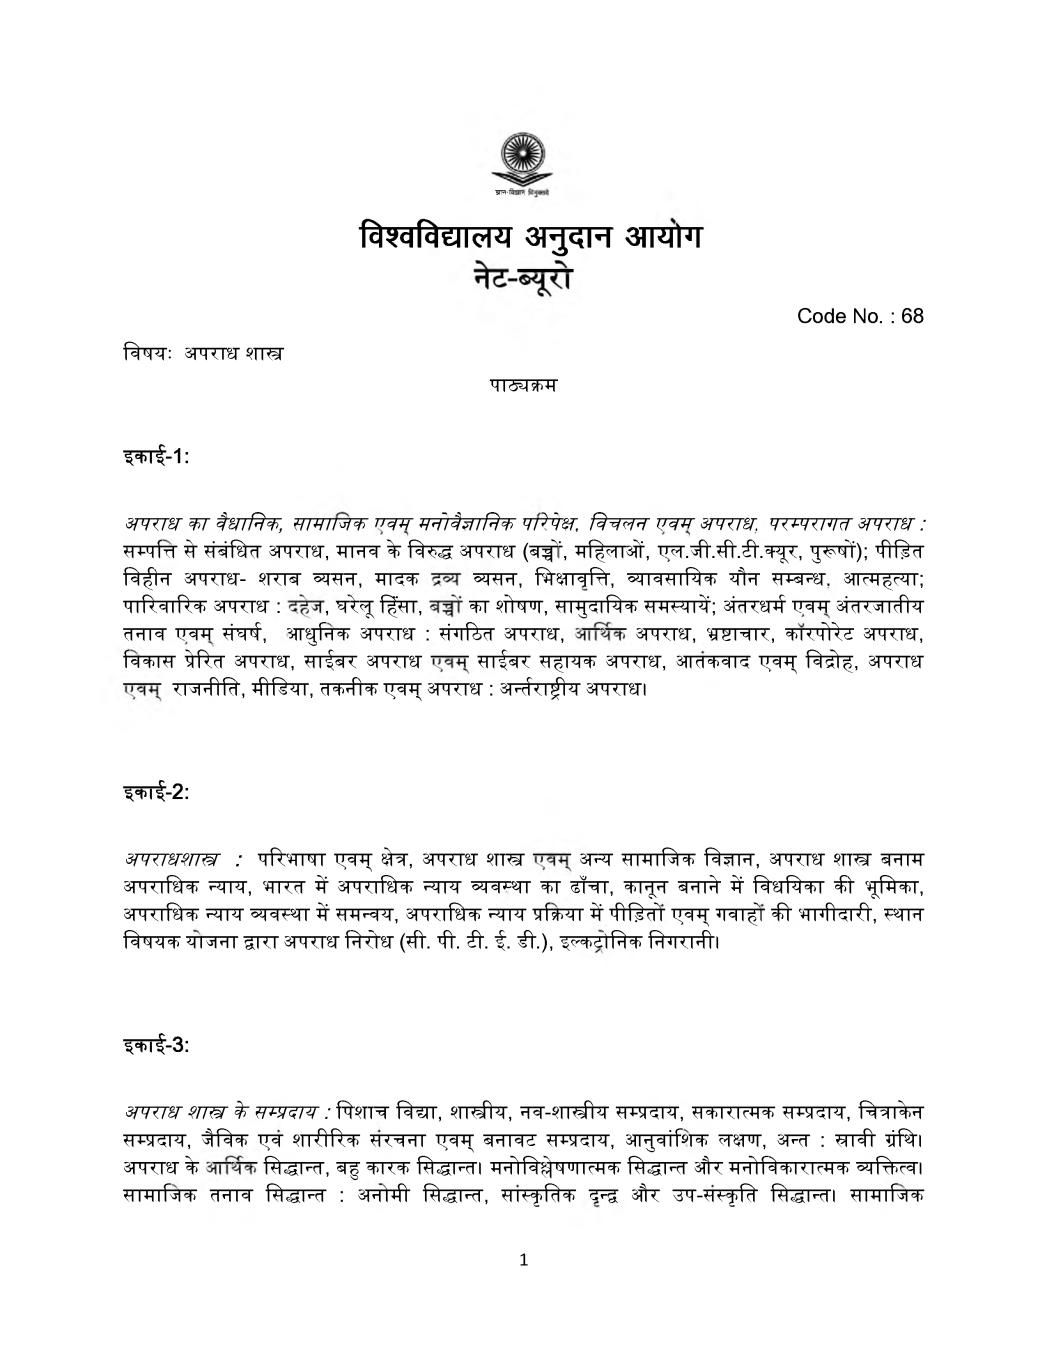 UGC NET Syllabus for Criminology 2020 in Hindi - Page 1